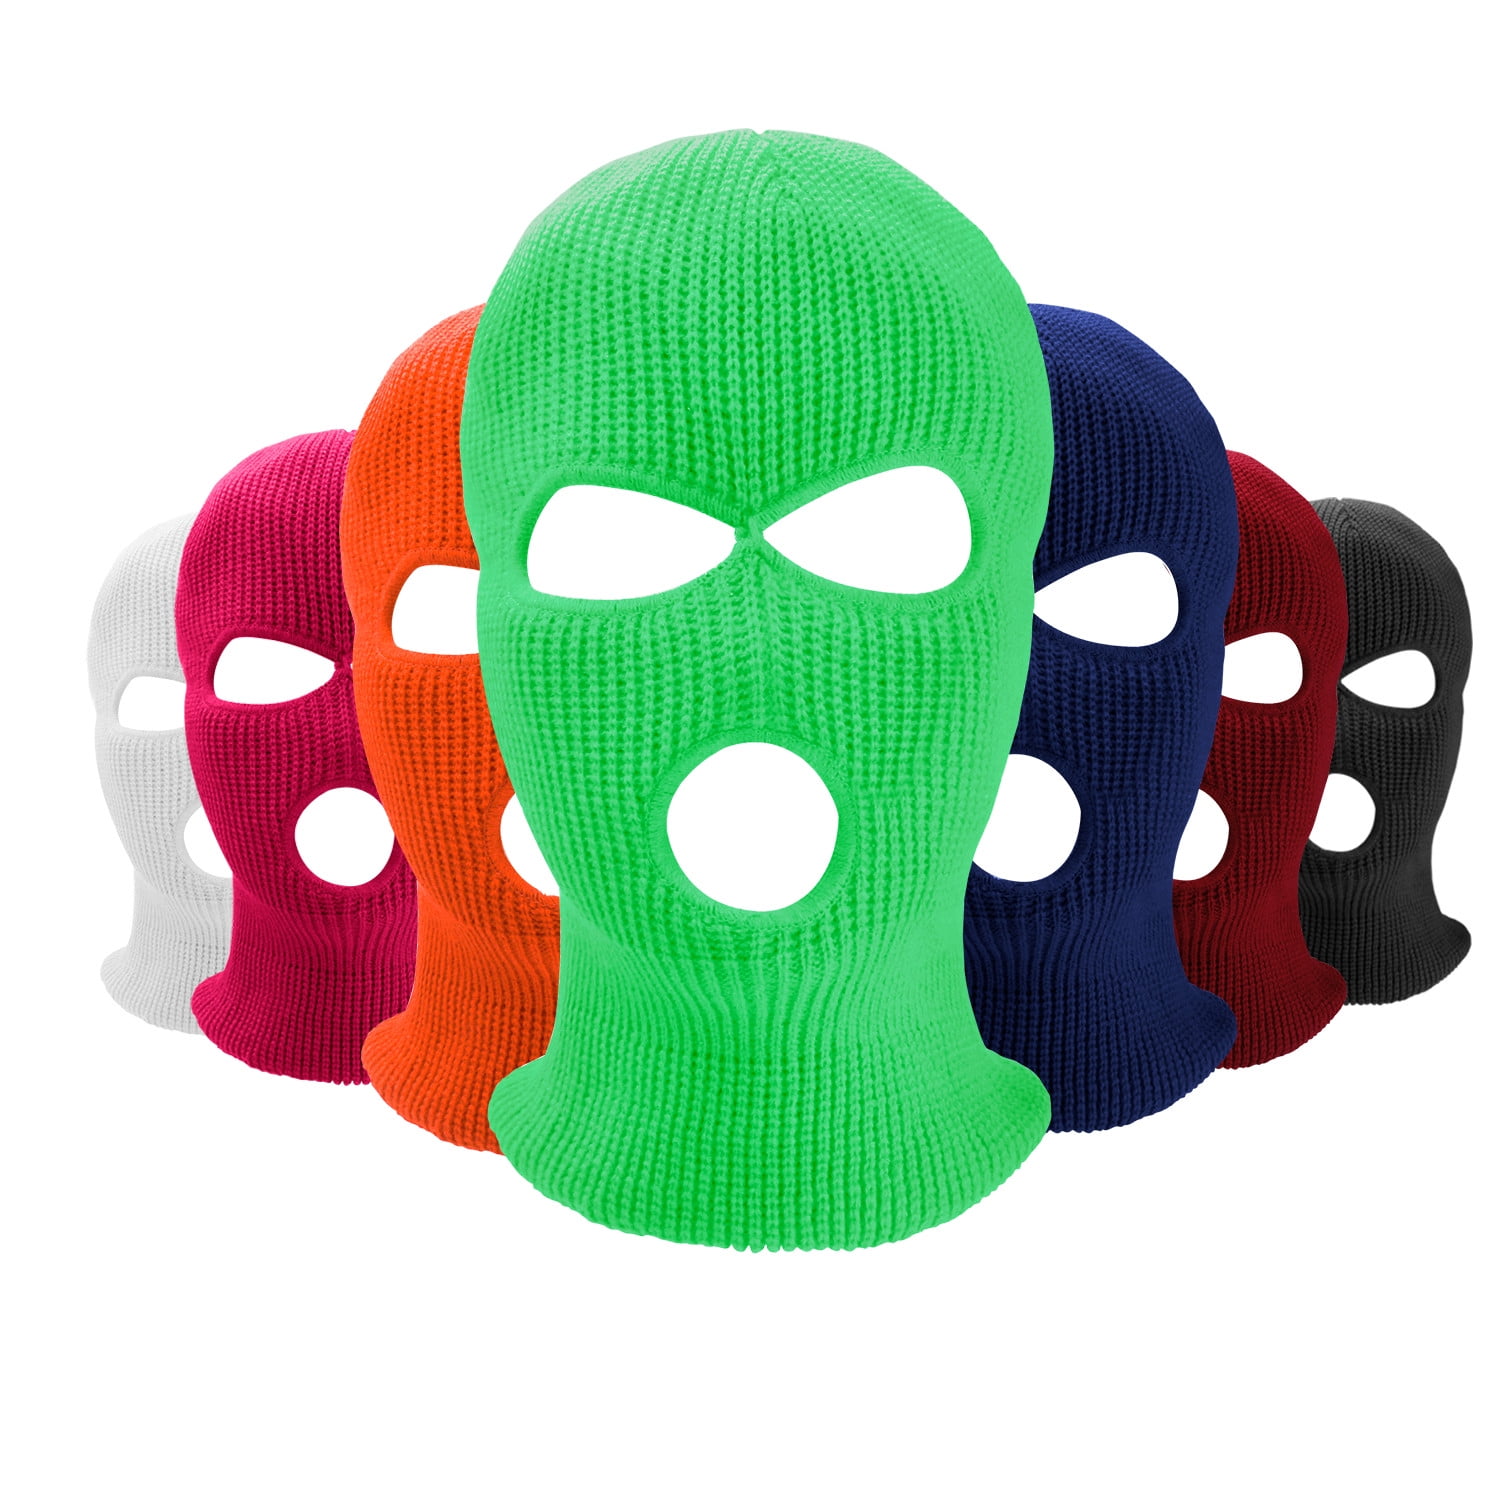 Practical Balaclava Knit 3 Hole Ski Mask Face Shield Beanie Cap Snow Winter Warm 